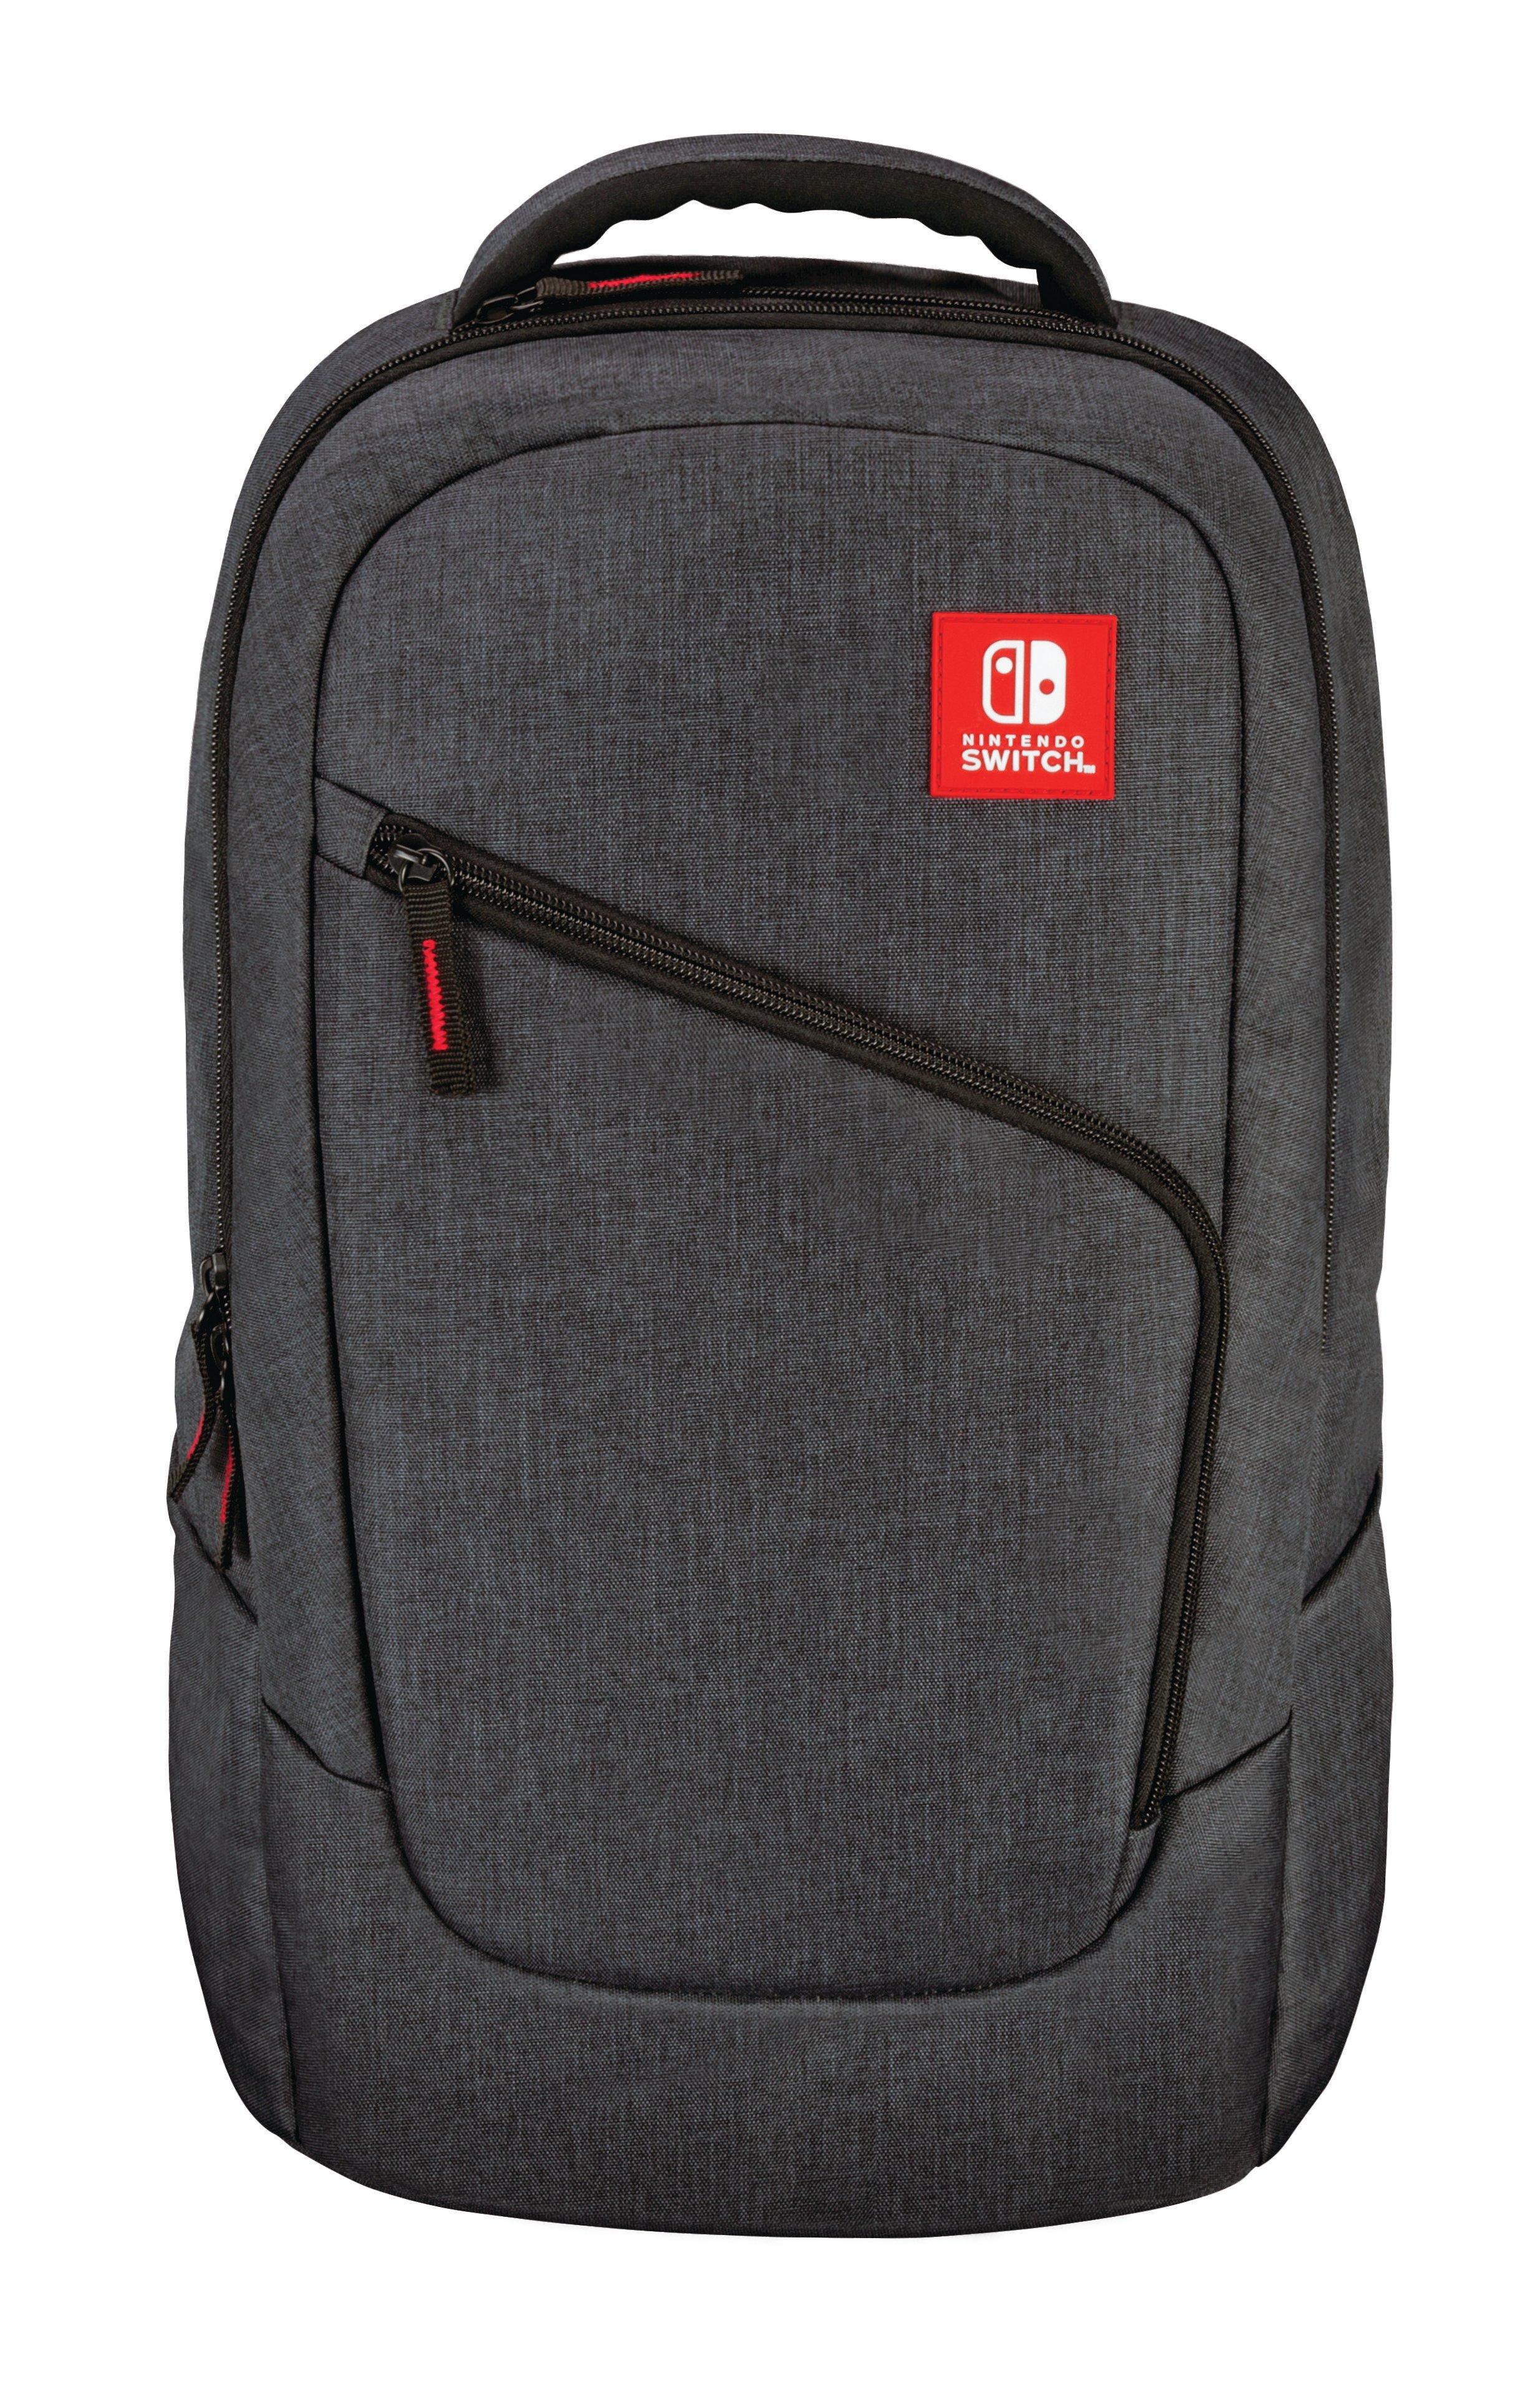 nintendo switch backpack elite edition